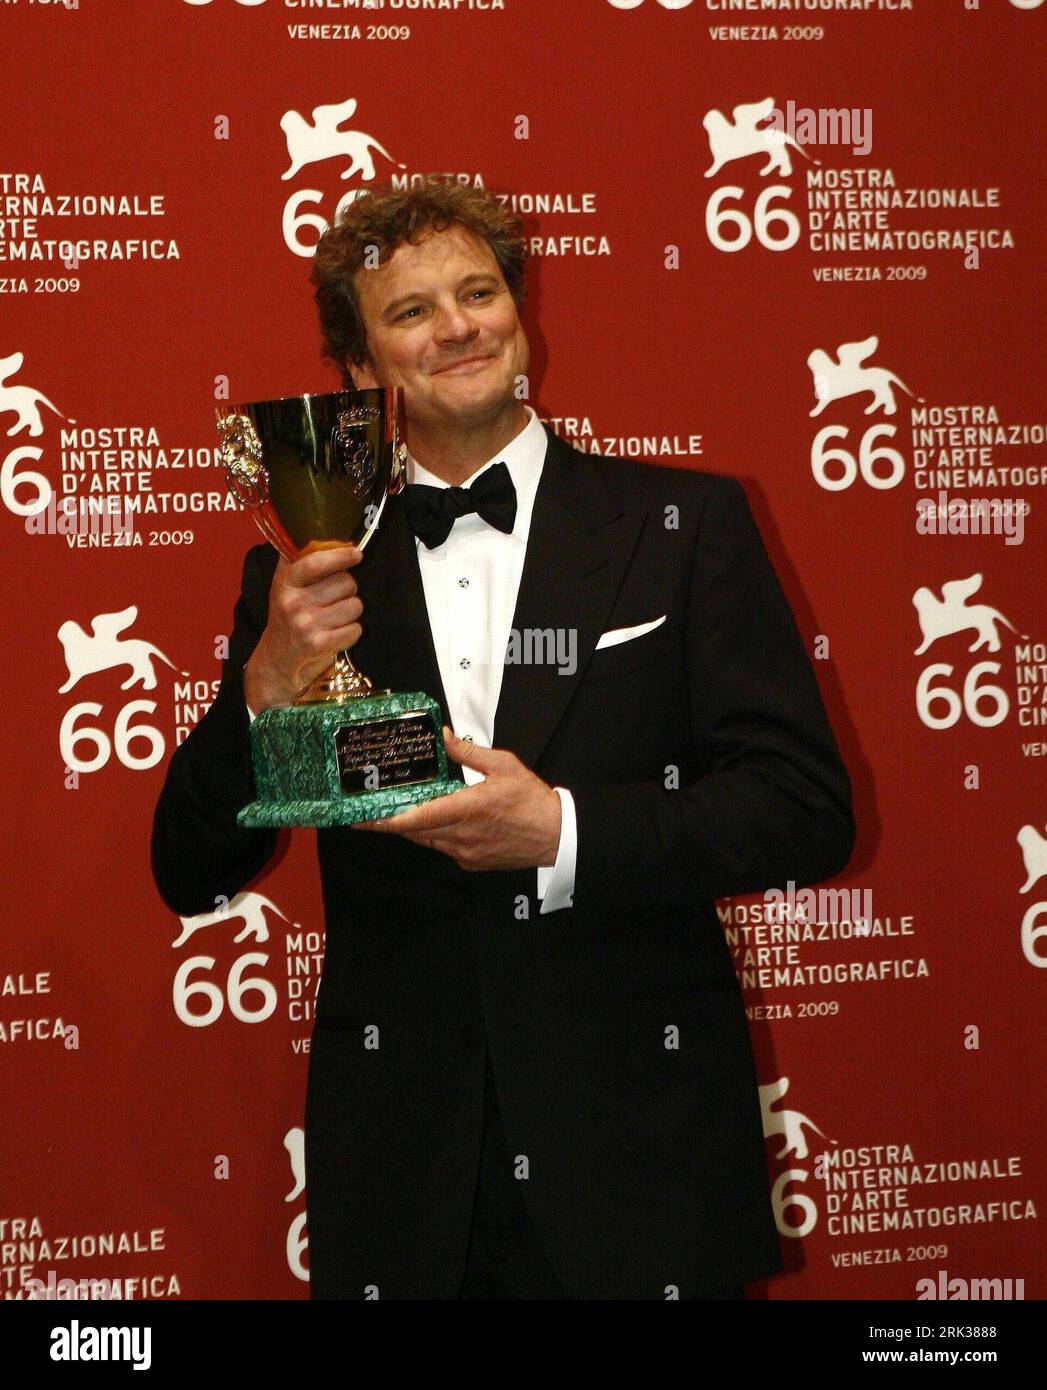 Bildnummer: 53351391  Datum: 12.09.2009  Copyright: imago/Xinhua (090913) -- VENICE, Sept. 13, 2009 (Xinhua) -- British actor Colin Firth shows the Best Actor award for his role in the film A Single Man during the 66th Venice International Film Festival at Venice Lido, Italy, on September 12, 2009. (Xinhua)(hdt) (2)ITALY-VENICE-FILM FESTIVAL-BEST ACTOR PUBLICATIONxNOTxINxCHN People Film Filmfestival Venedig o00 Biennale o00 Pressetermin Gewinner Sieger Preisverleihung Trophäe premiumd kbdig xng 2009 hoch o0 Preis o00 Preisträger  Bester Schauspieler o00 Porträt Der Einzelgänger    Bildnummer 5 Stock Photo